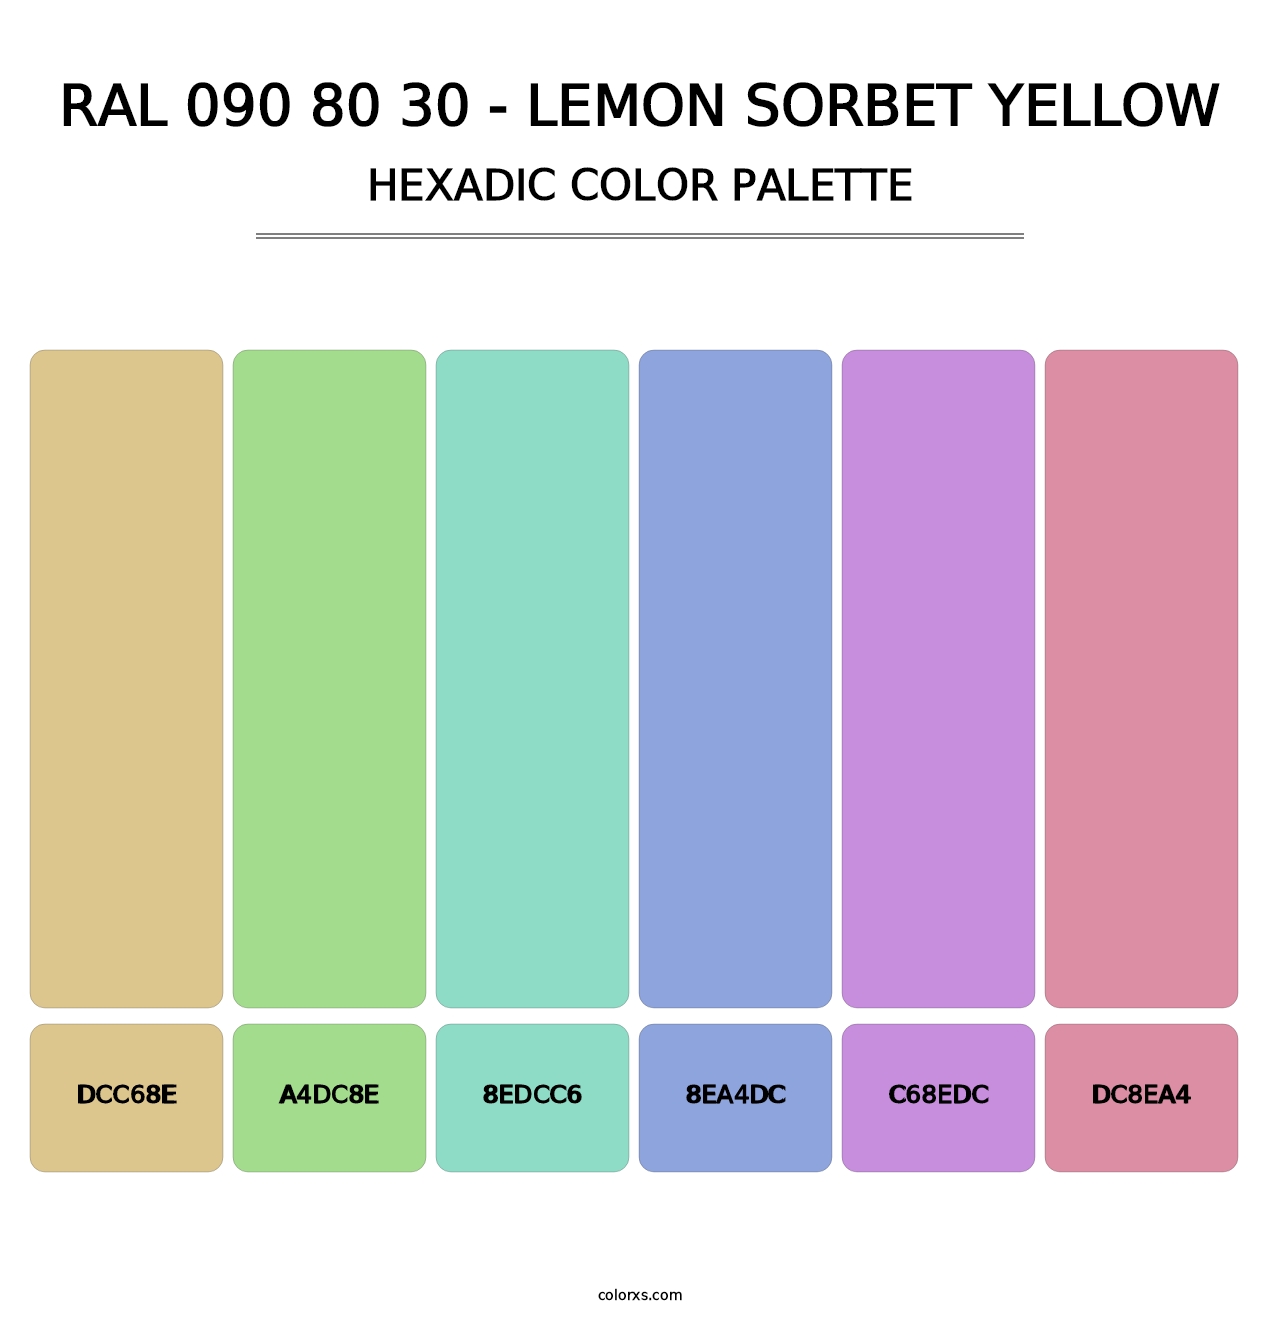 RAL 090 80 30 - Lemon Sorbet Yellow - Hexadic Color Palette